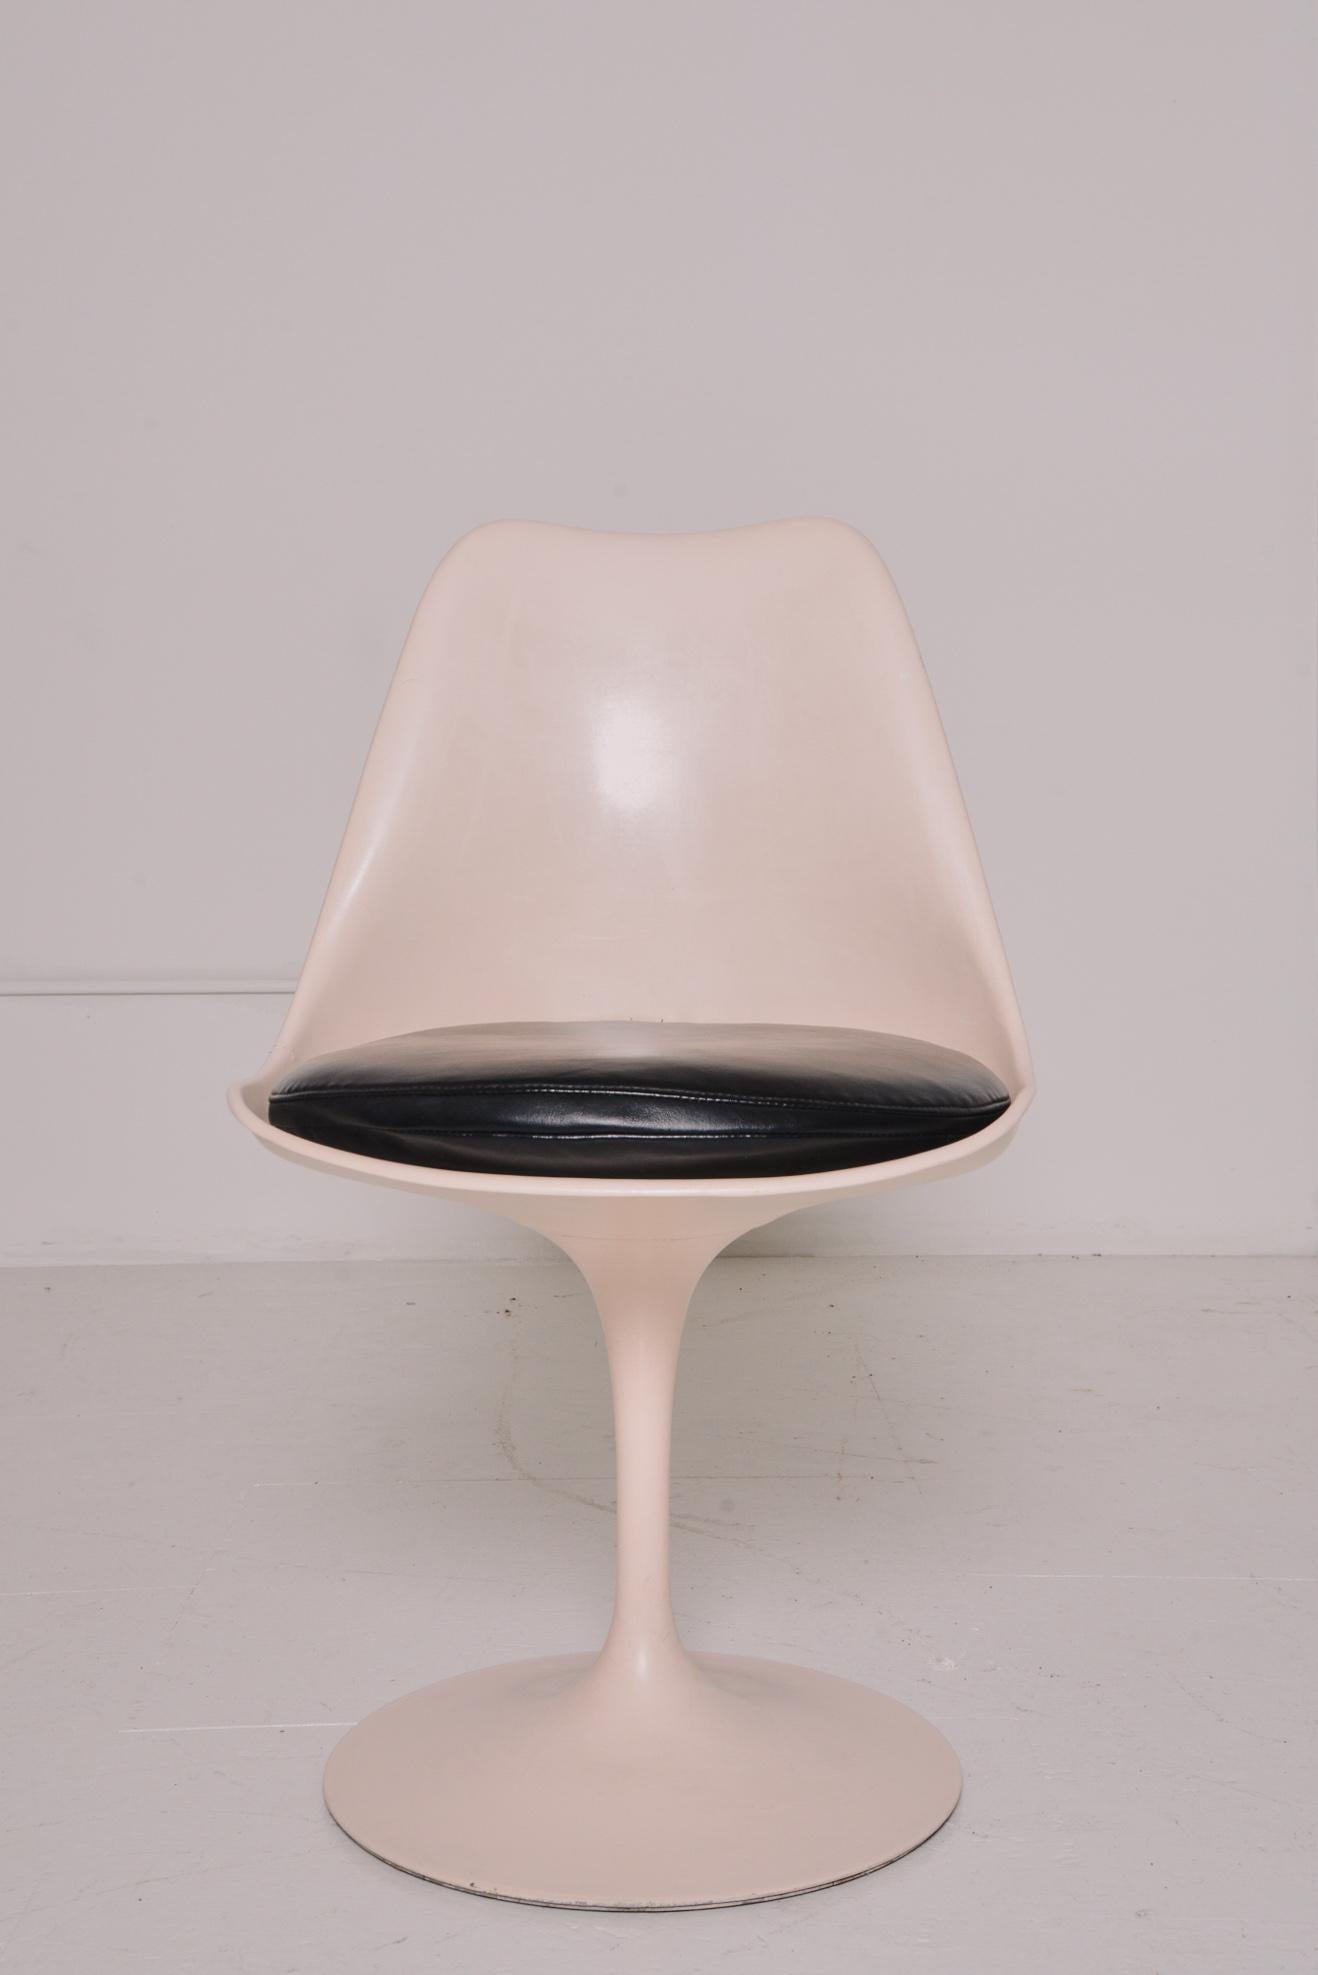 Mid-Century Modern Authentic Early Knoll Eero Saarinen Tulip Chairs in Black Leather Seat Cushion